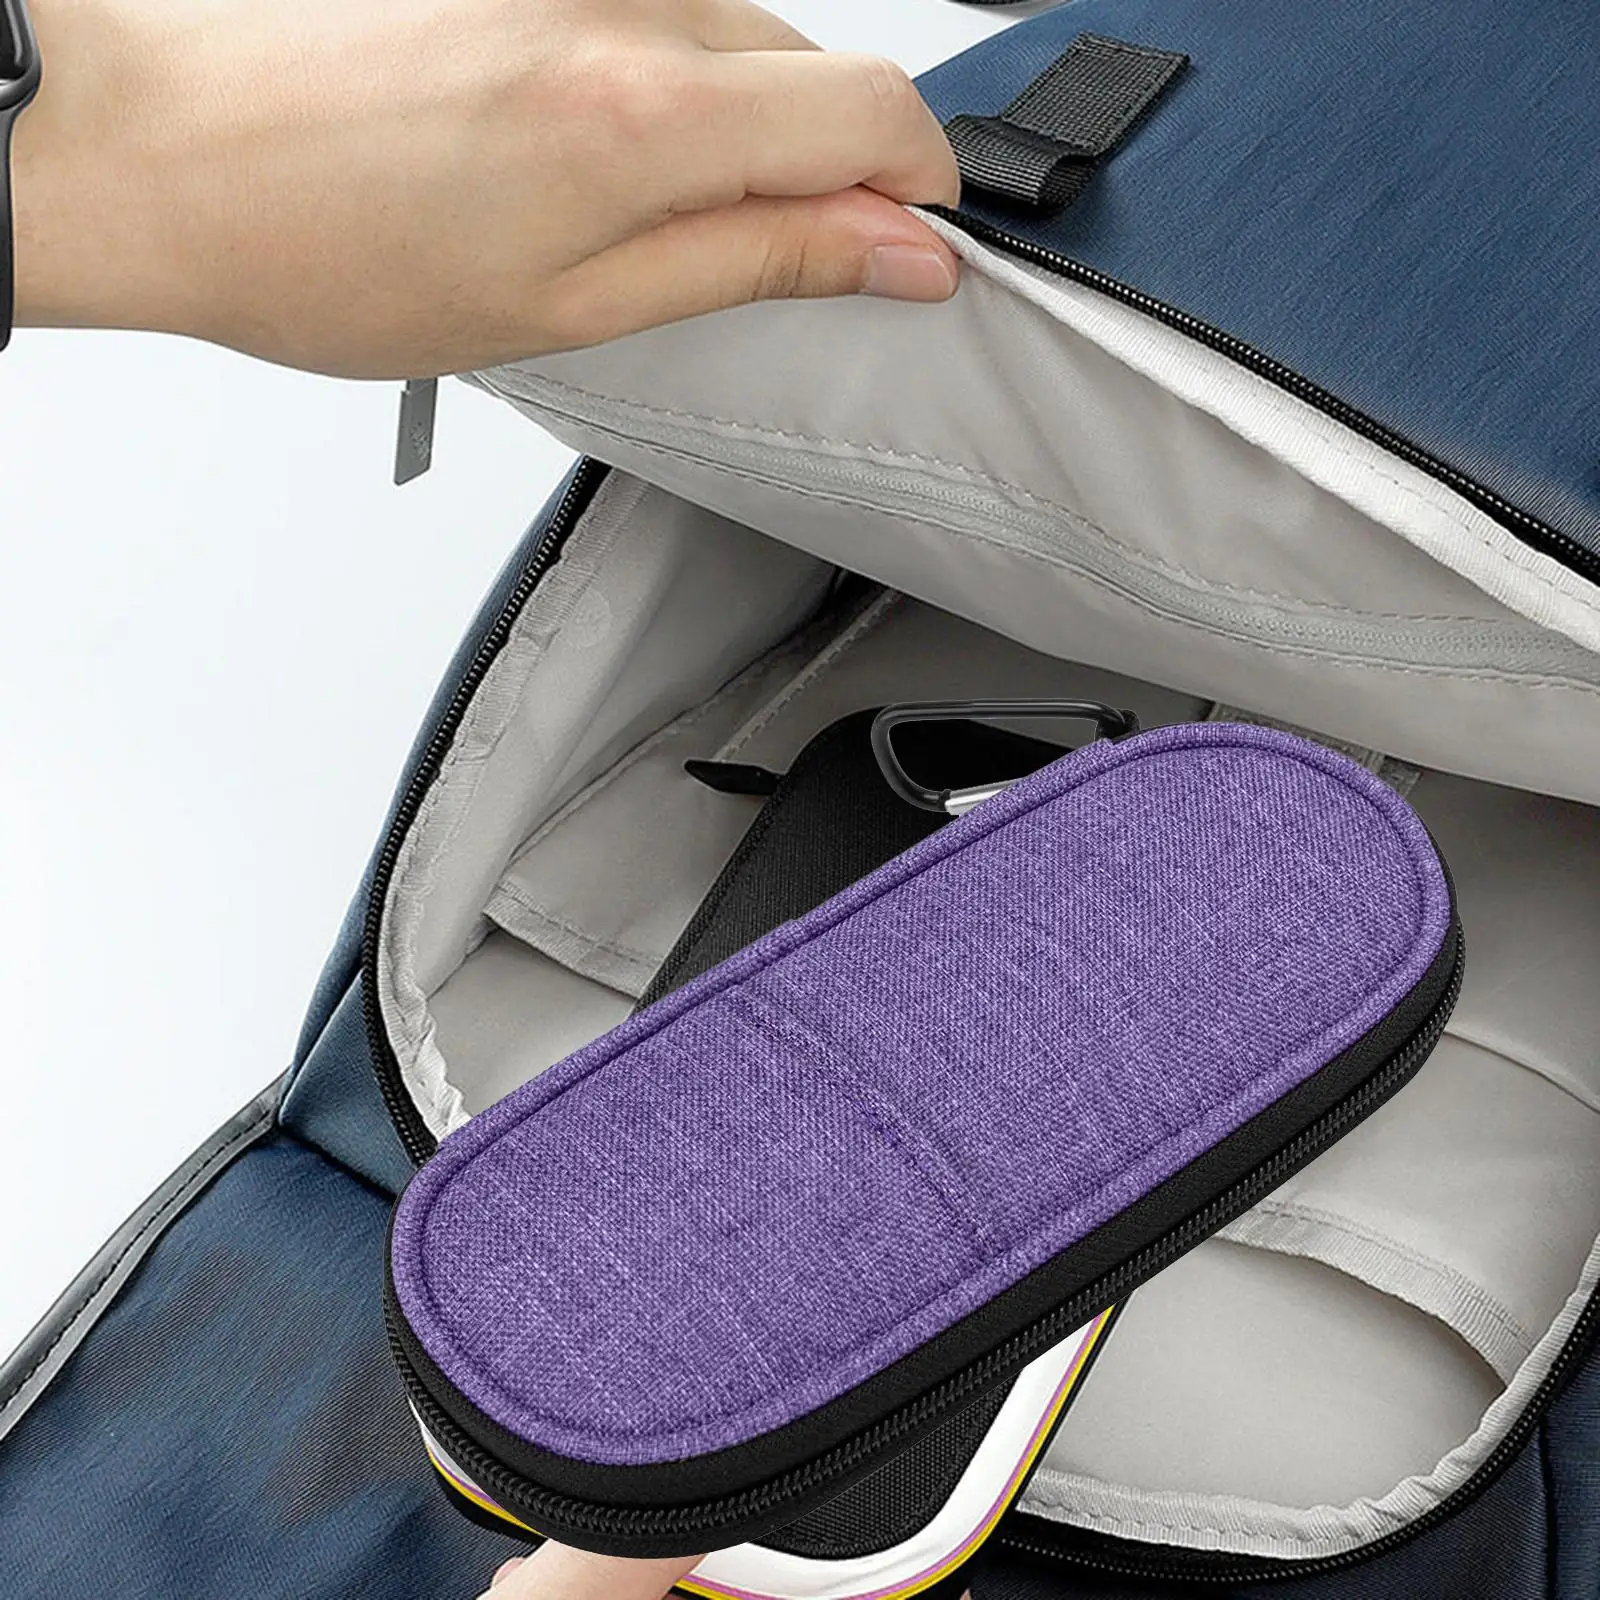 Cooler Travel Case Mini Ice Pack Cooler Pocket Convenient Carrying Bag